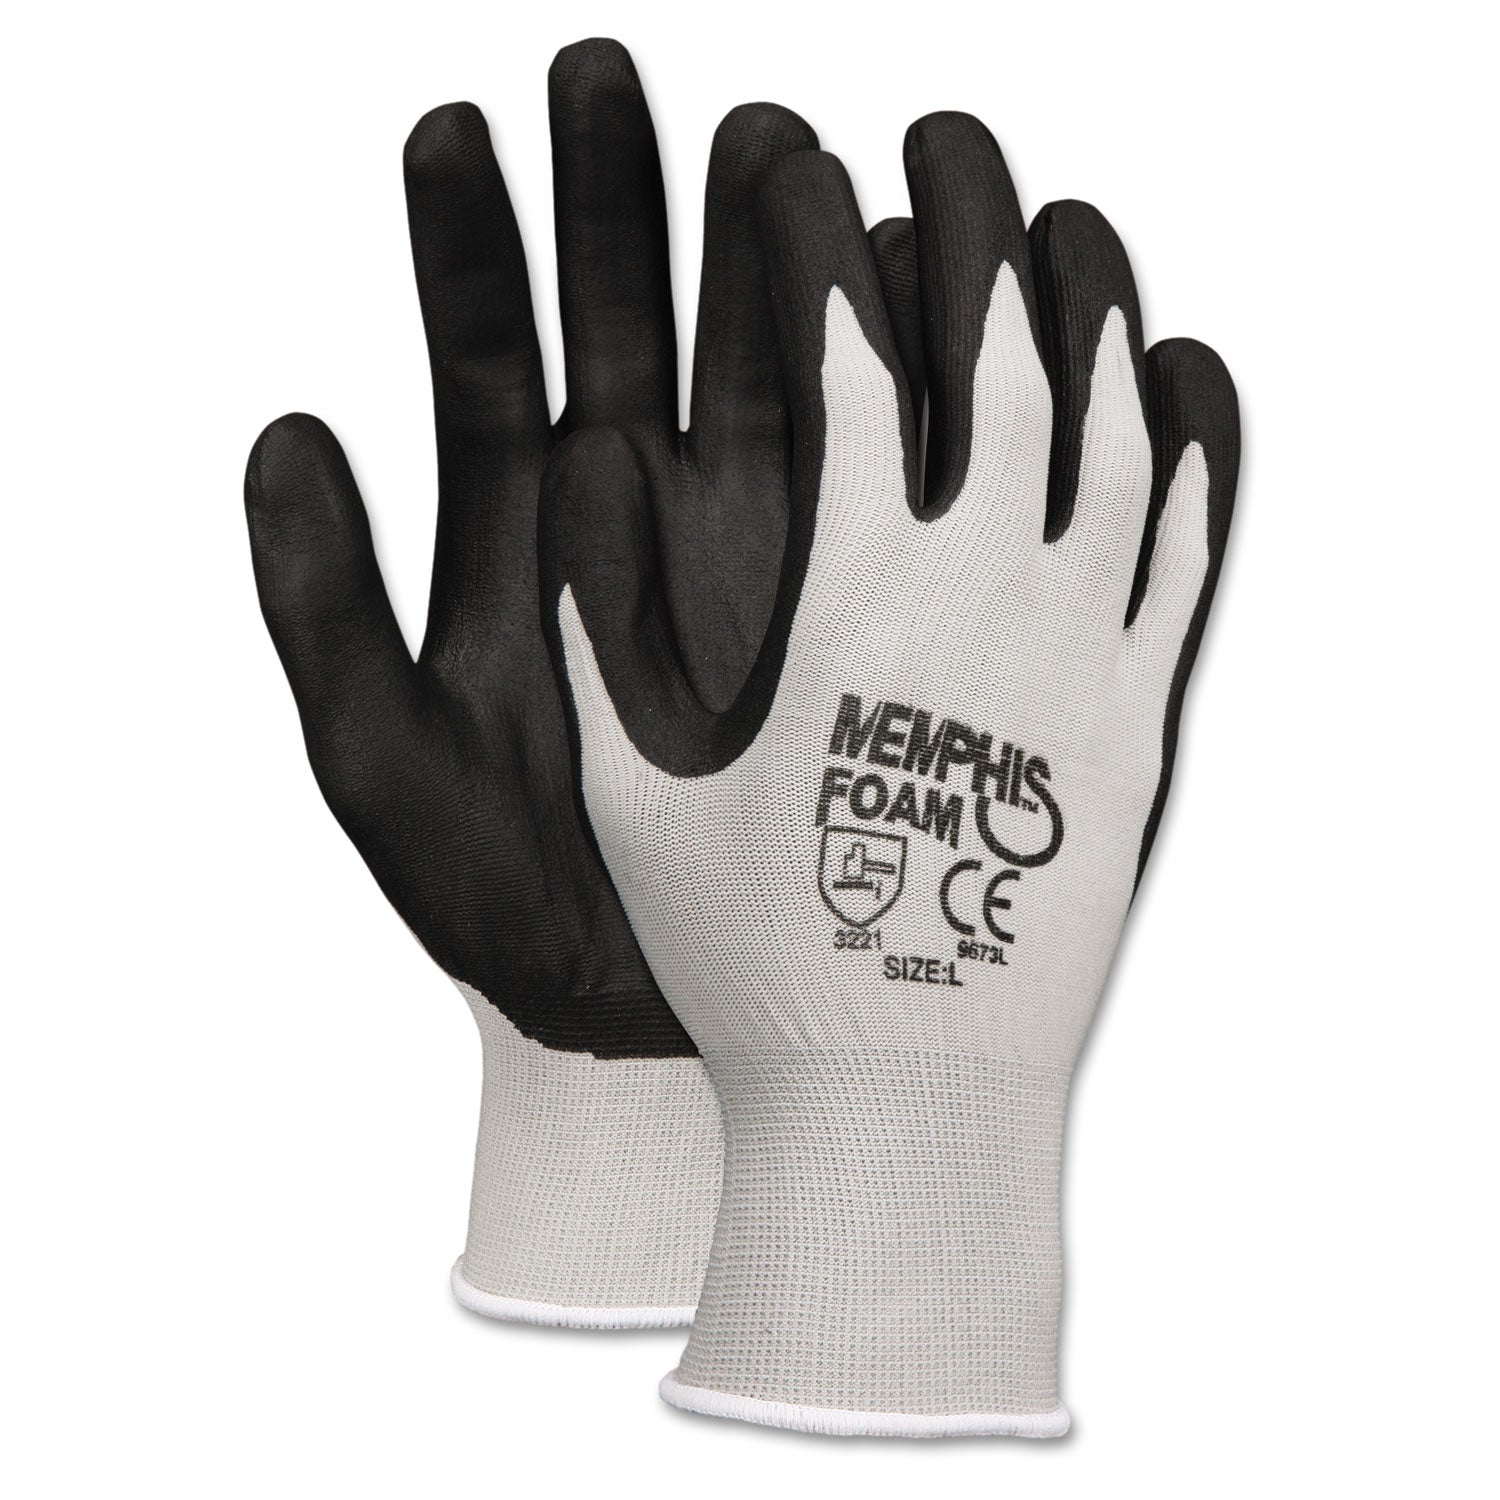 Economy Foam Nitrile Gloves, Medium, Gray/Black, 12 Pairs - 